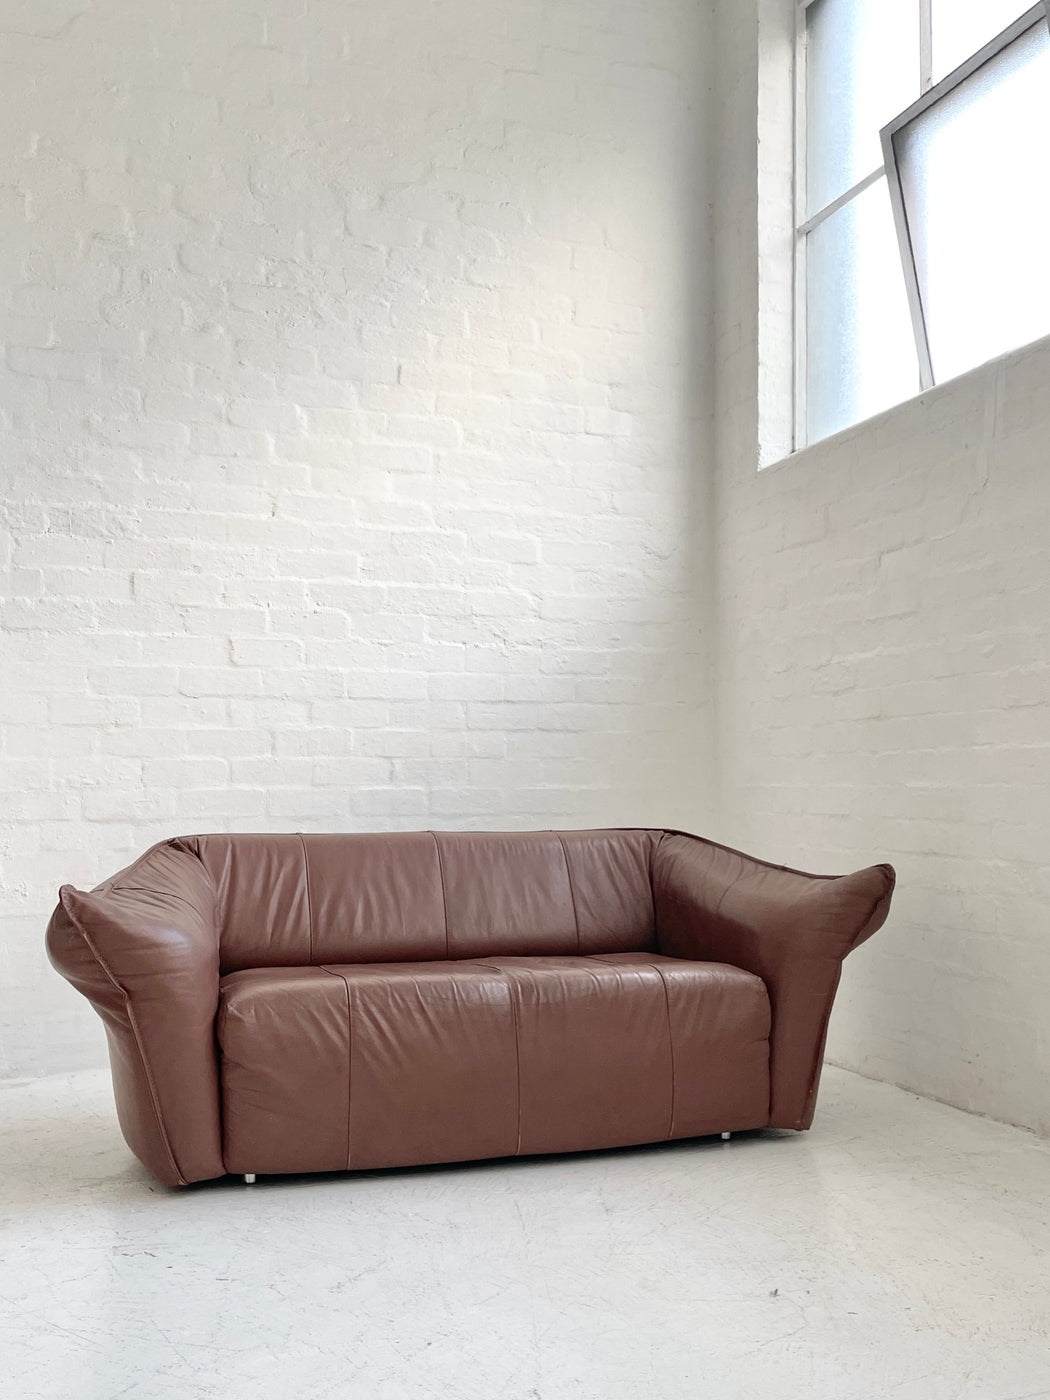 Gerard van den Berg 'Andes' Sofa